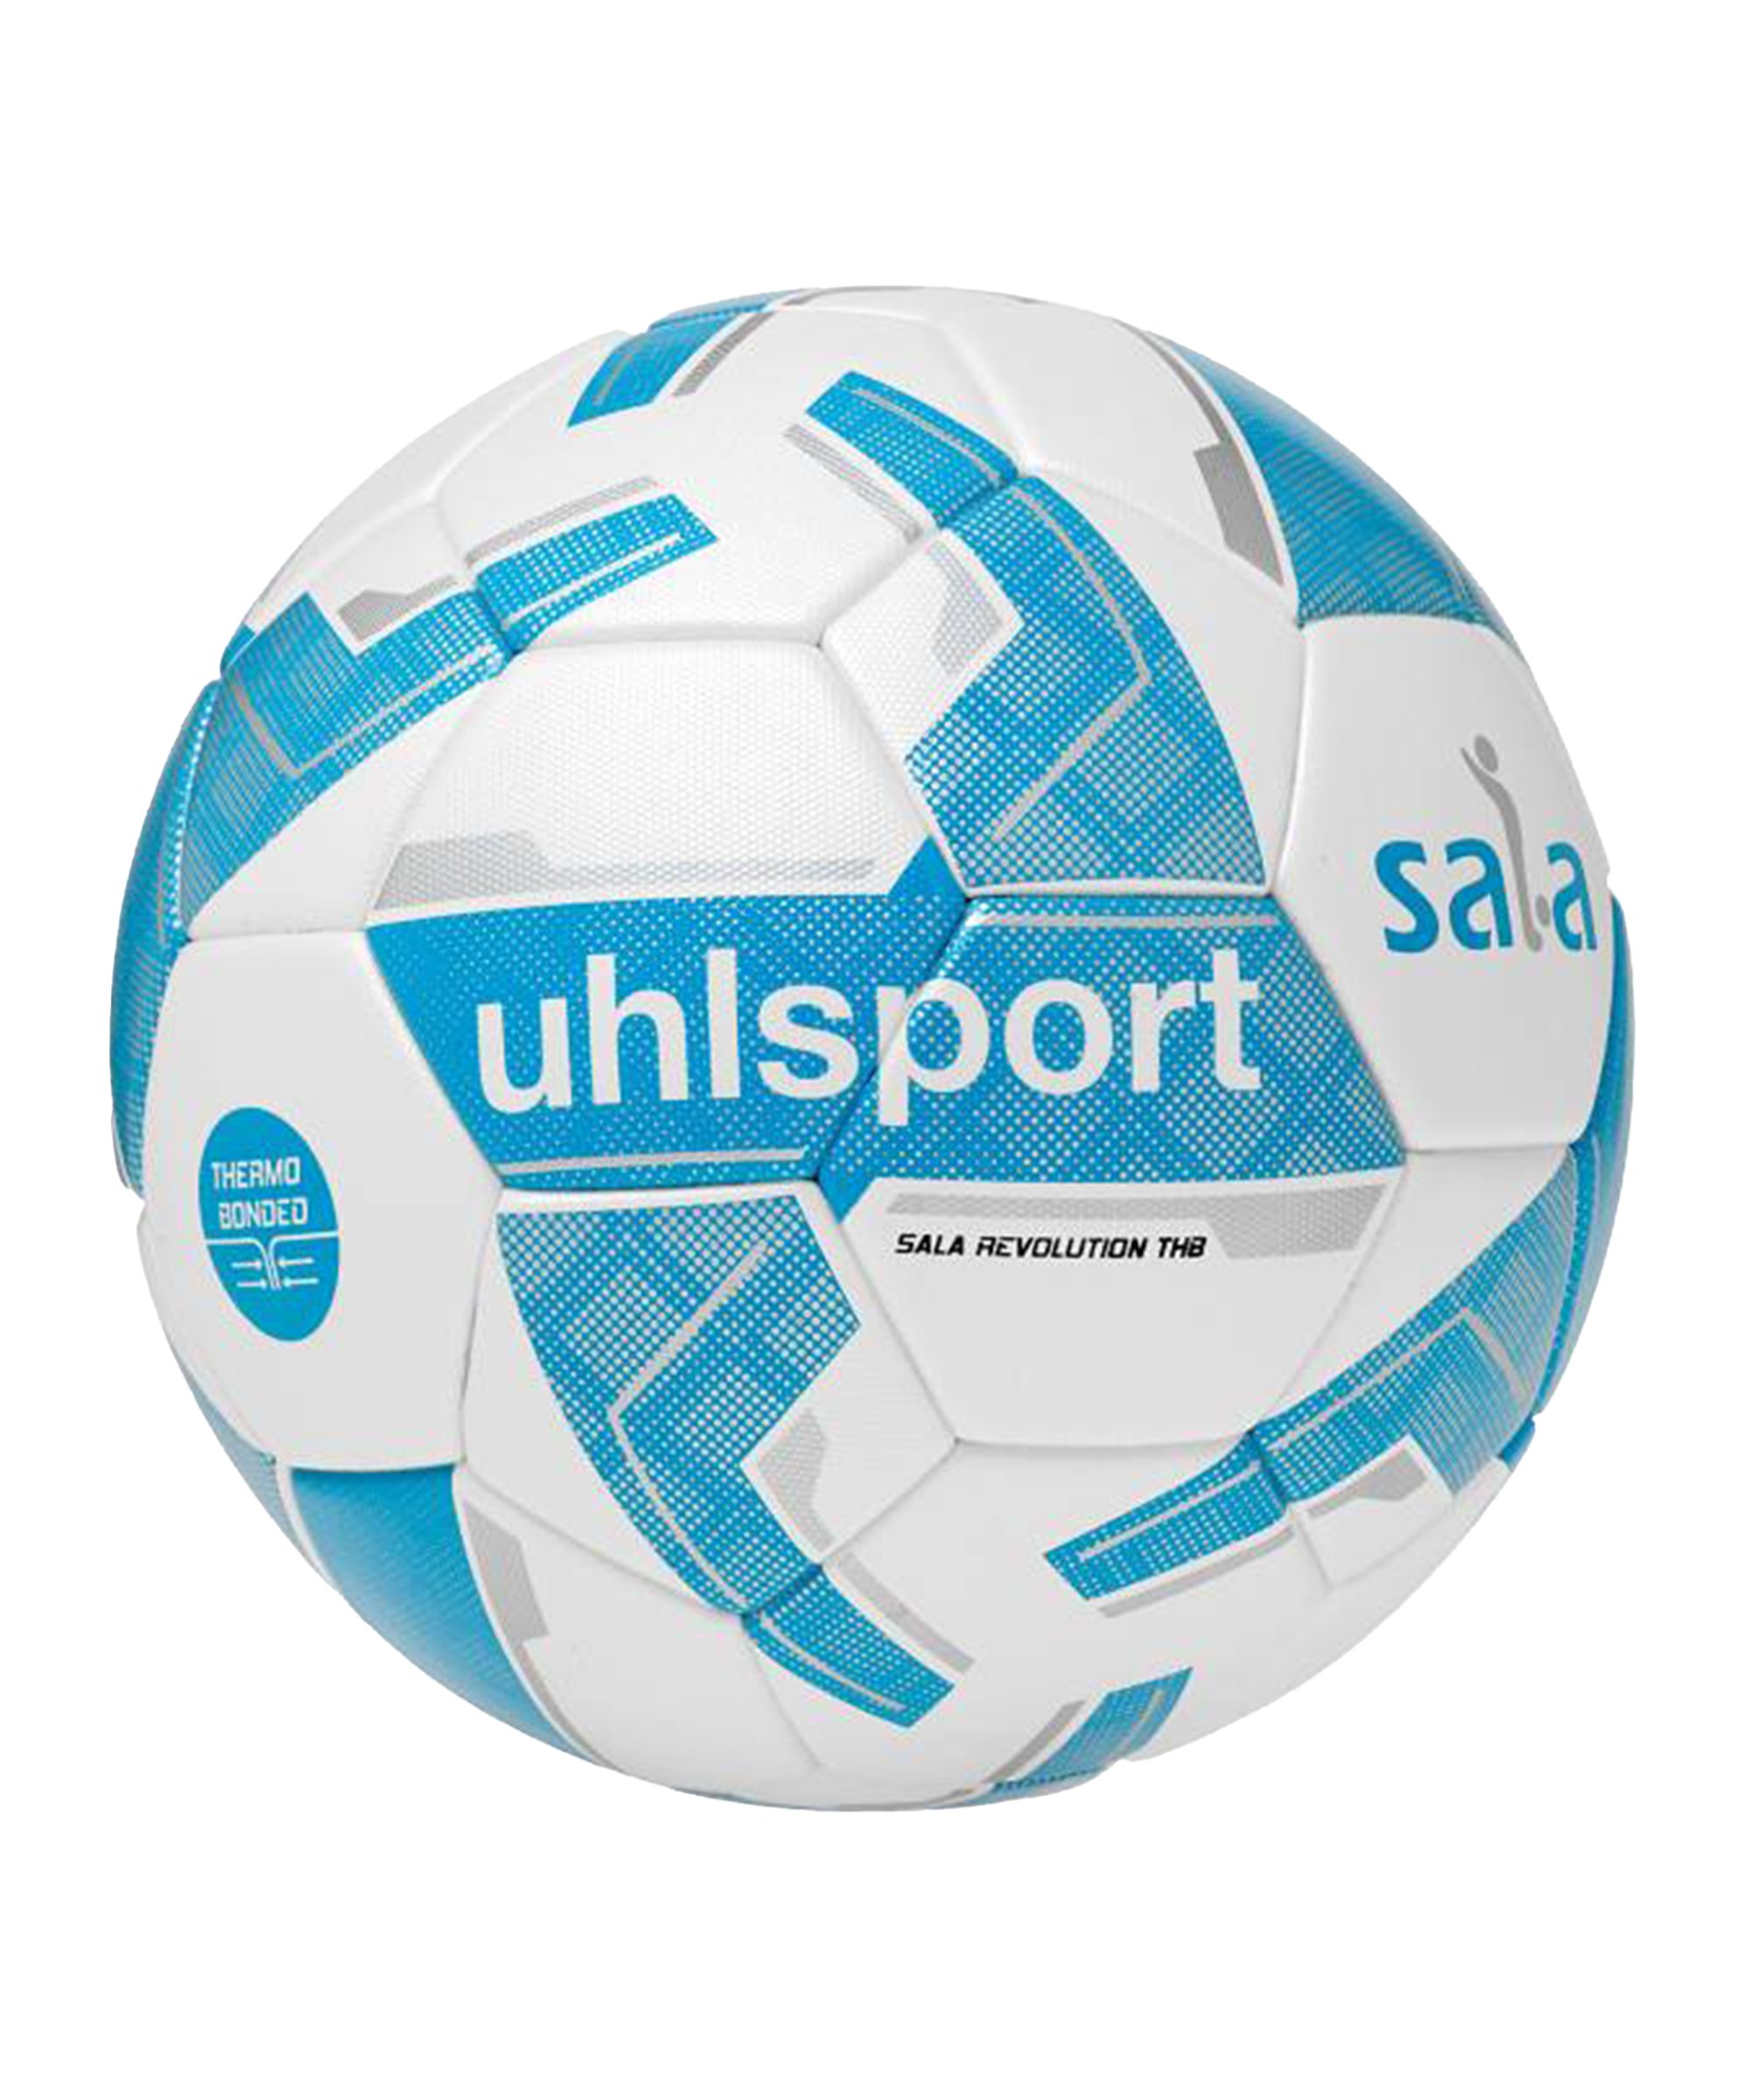 Uhlsport Sala Revolution Trainingsball Weiss F01 - weiss